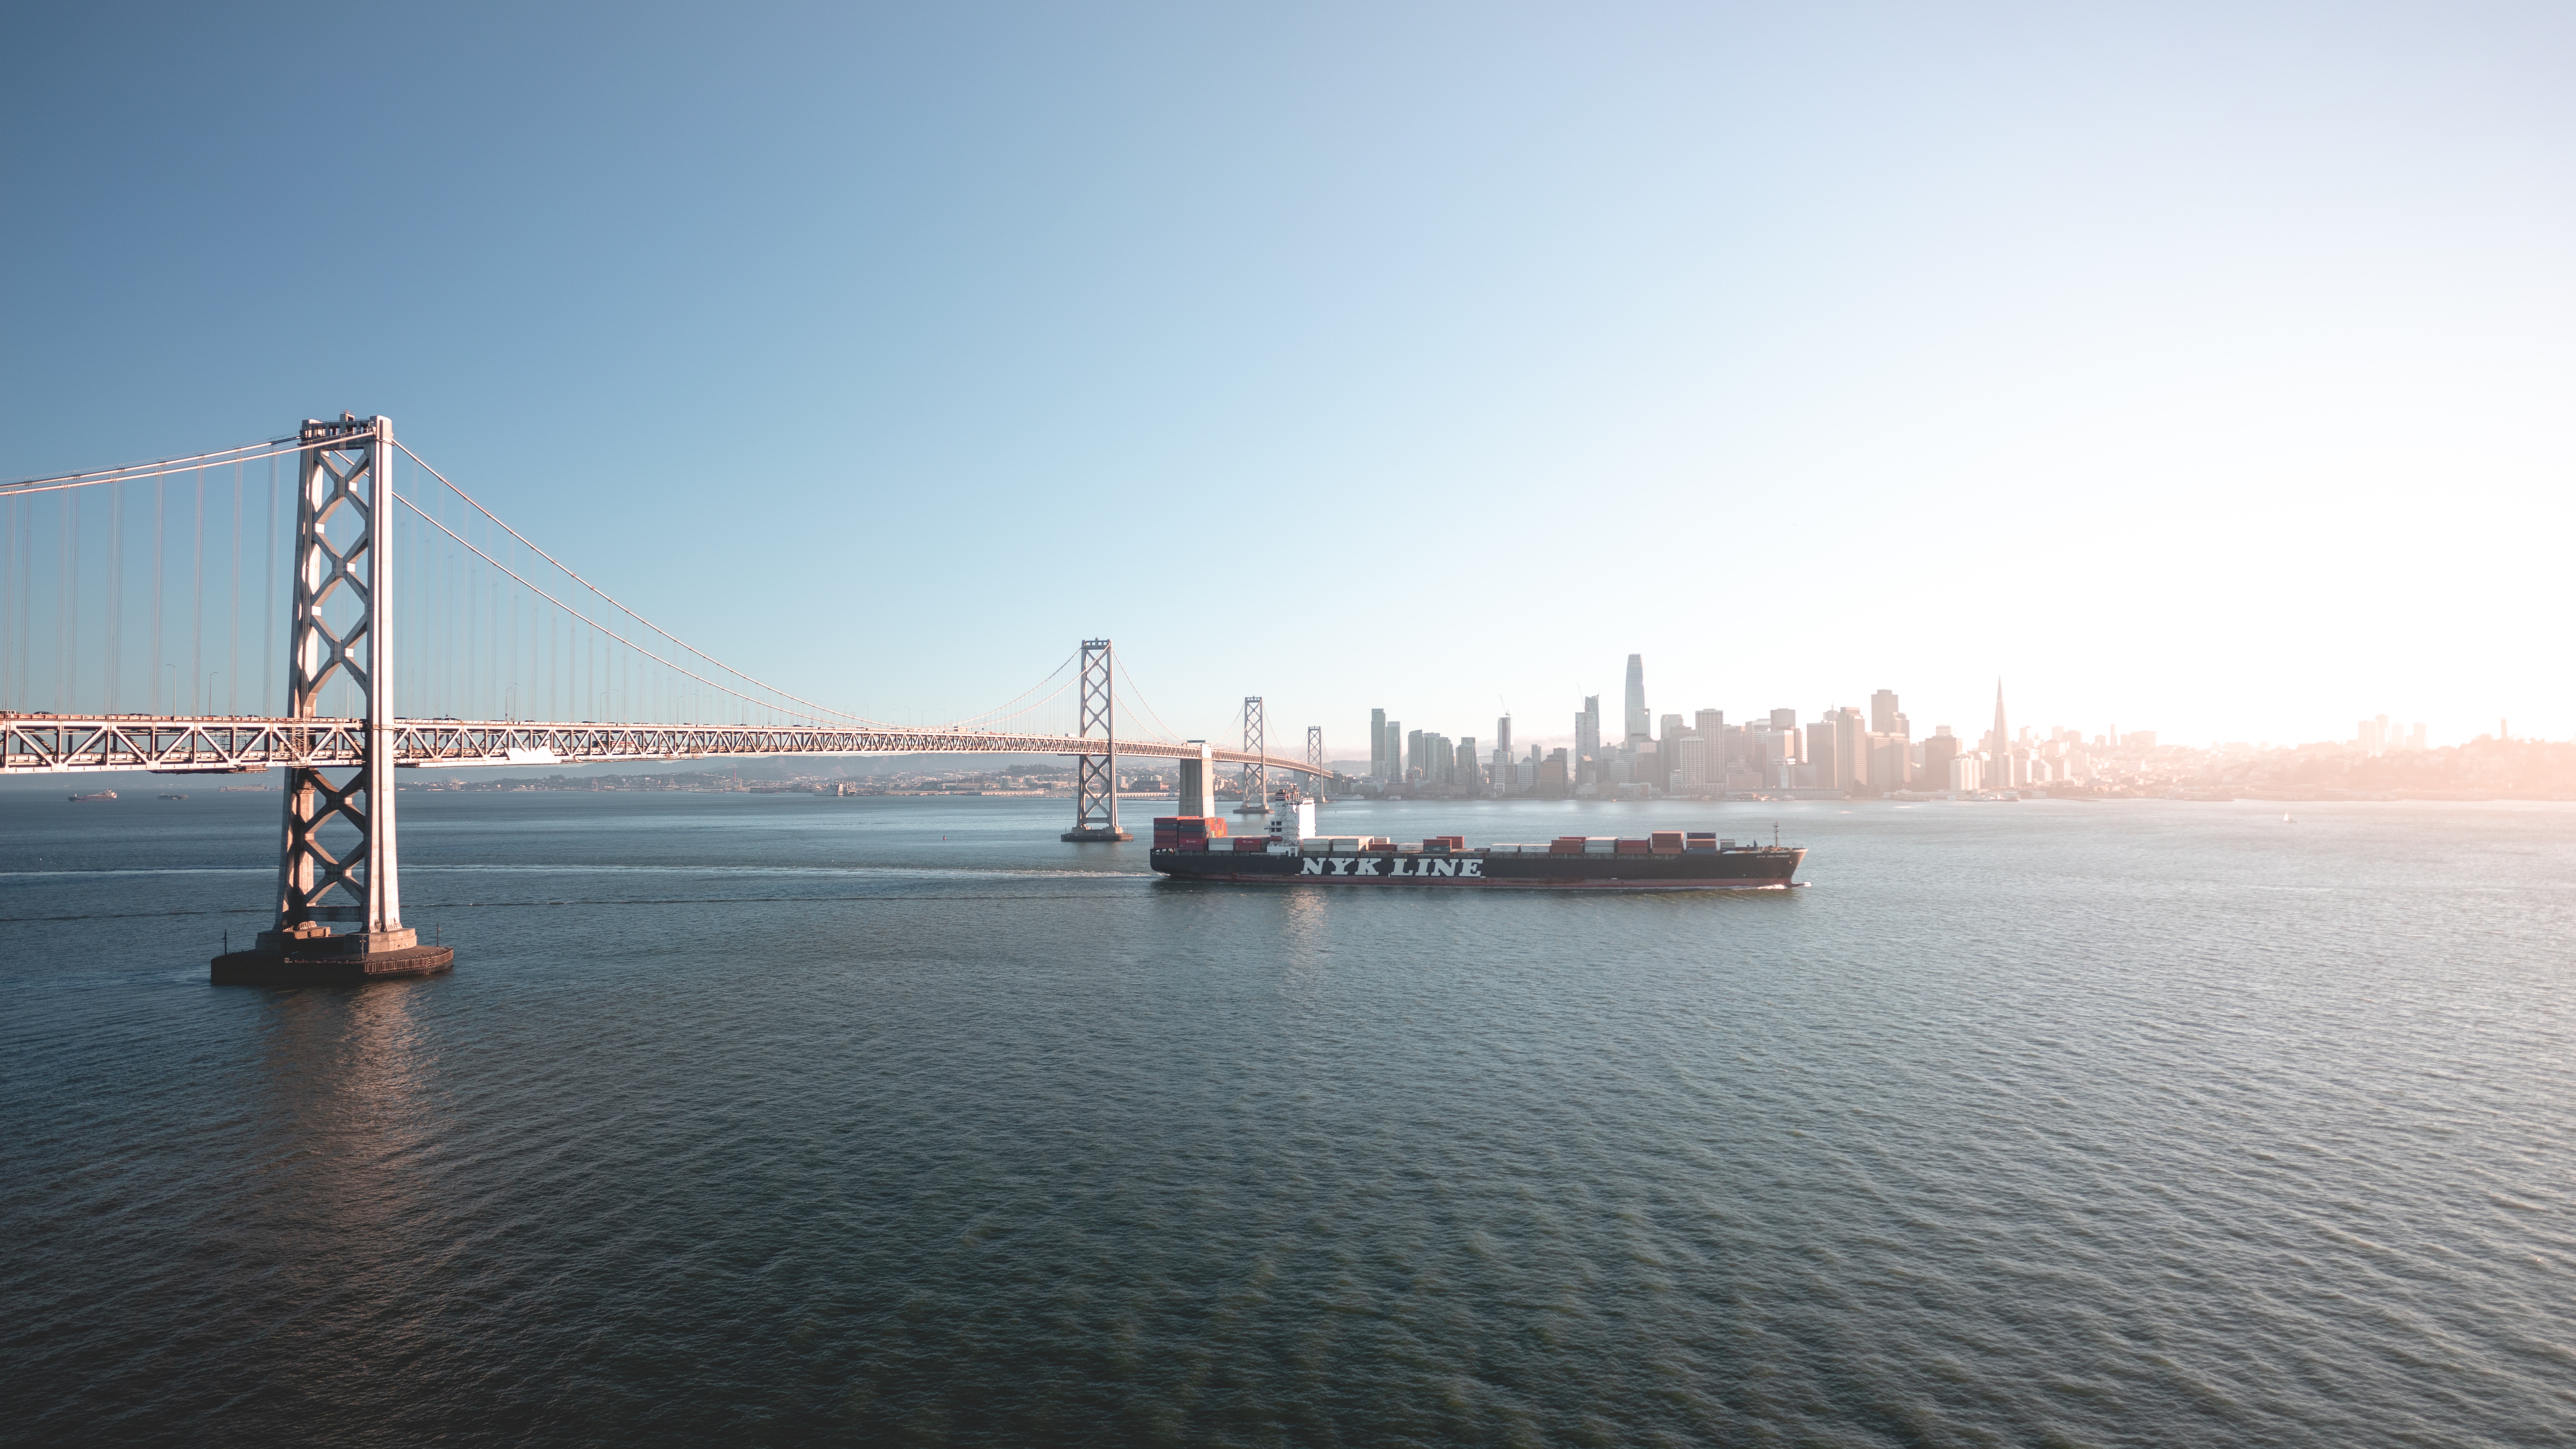 General 7360x4140 San Francisco USA bridge river skyscraper clear sky container ship ship sunrise coast